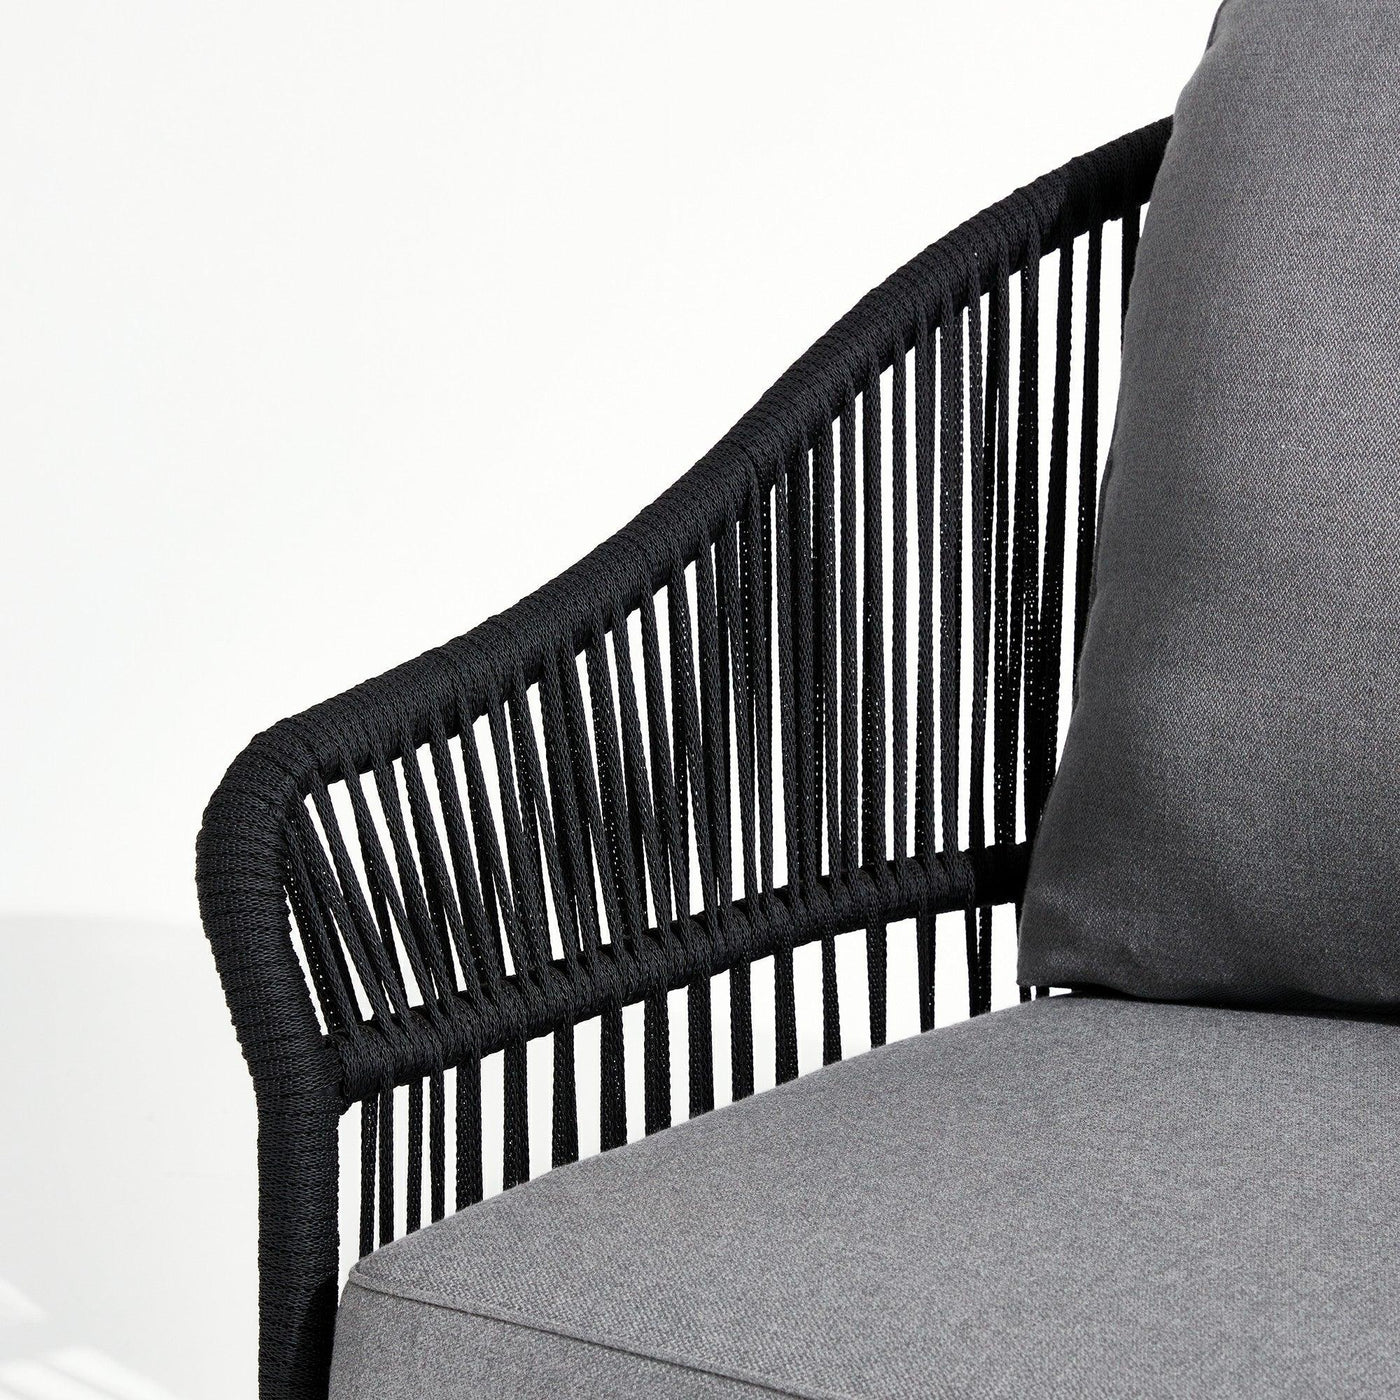 Wonder - Balboa 3-Seater Sofa,black rope design,smooth armrest, soft grey cushions,weather-resistant fabric,detailed view-Sunsitt Signature